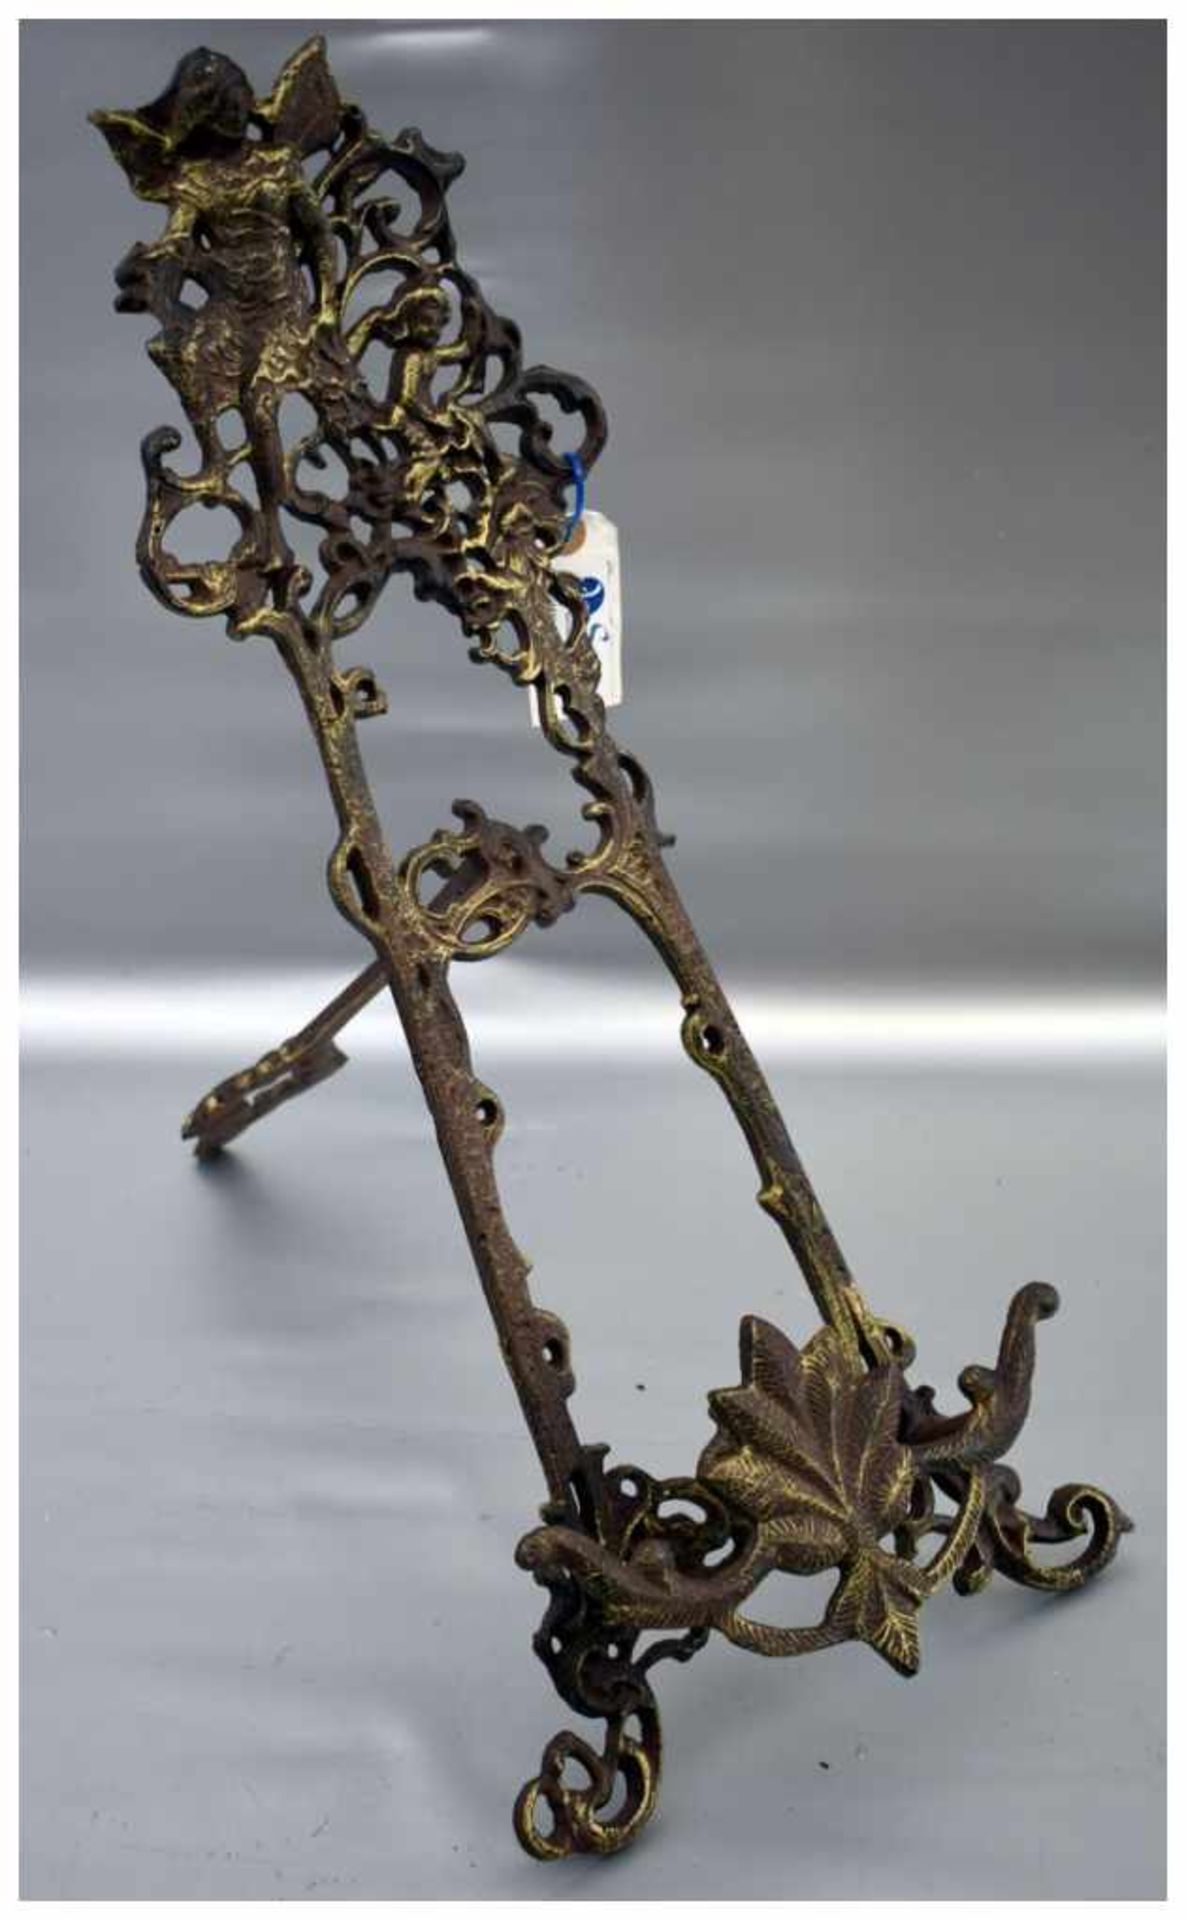 Staffelei Eisen, gold verziert, durchbrochen verziert, Bekrönung mit Elfen, H 58 cm, B 25 cm